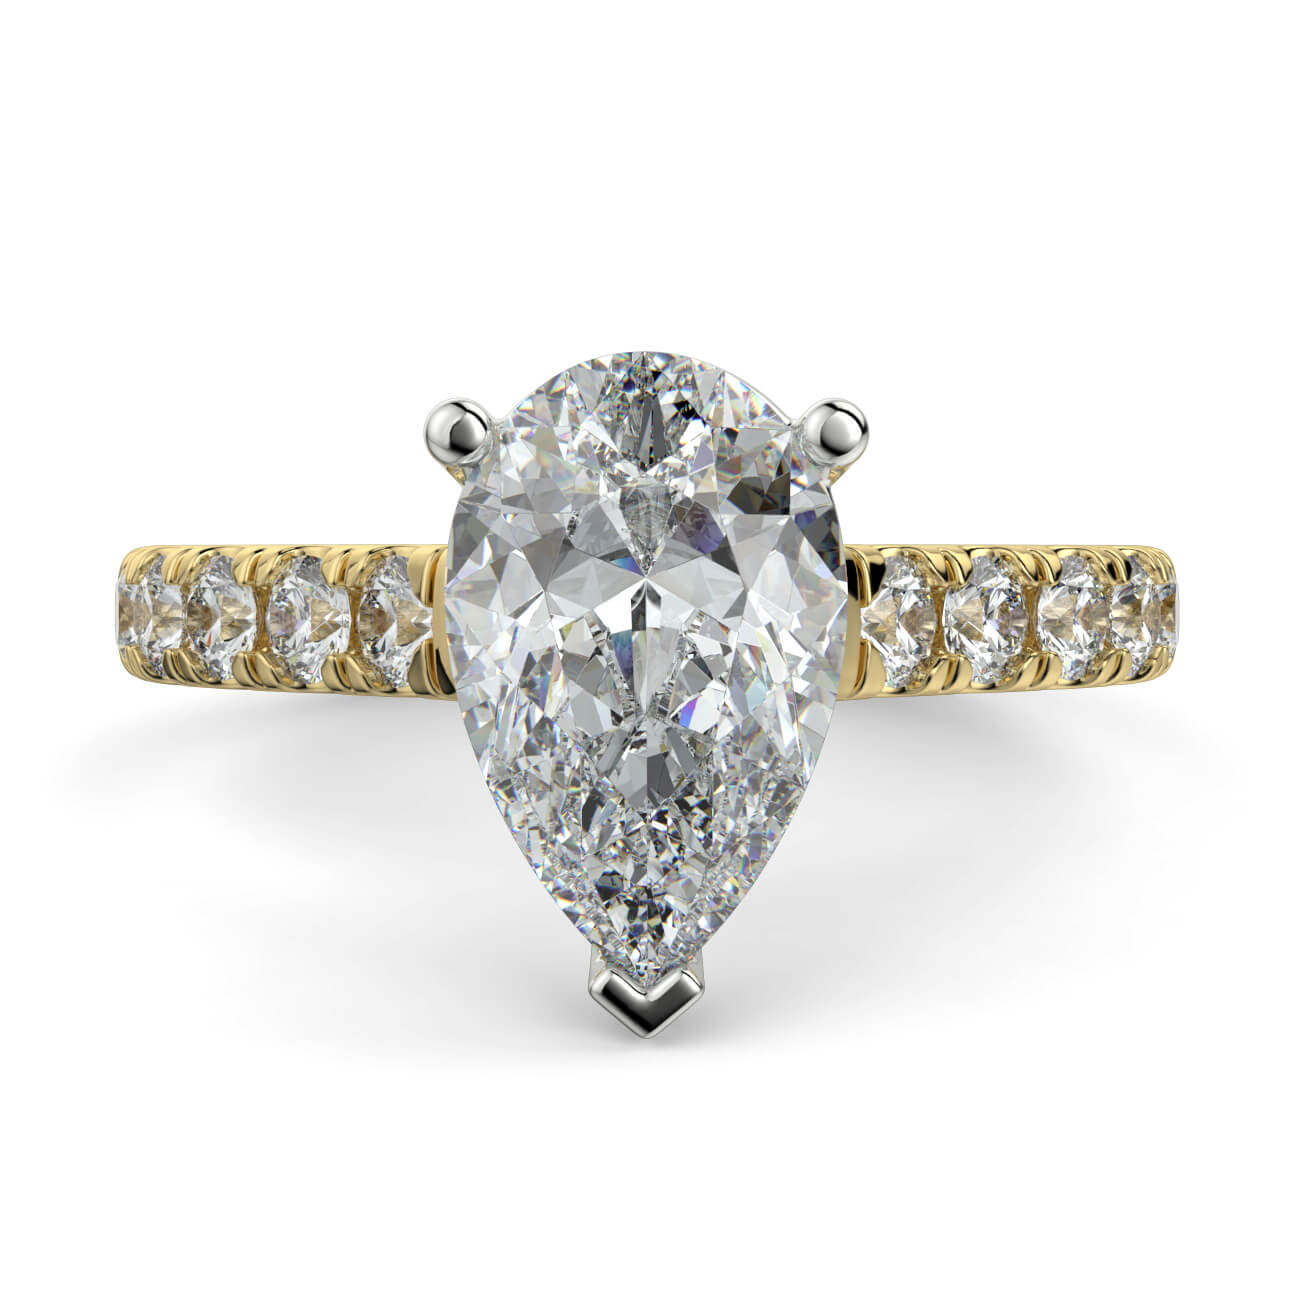 Prestige Pear Cut Diamond Engagement Ring In Yellow and White Gold – Australian Diamond Network